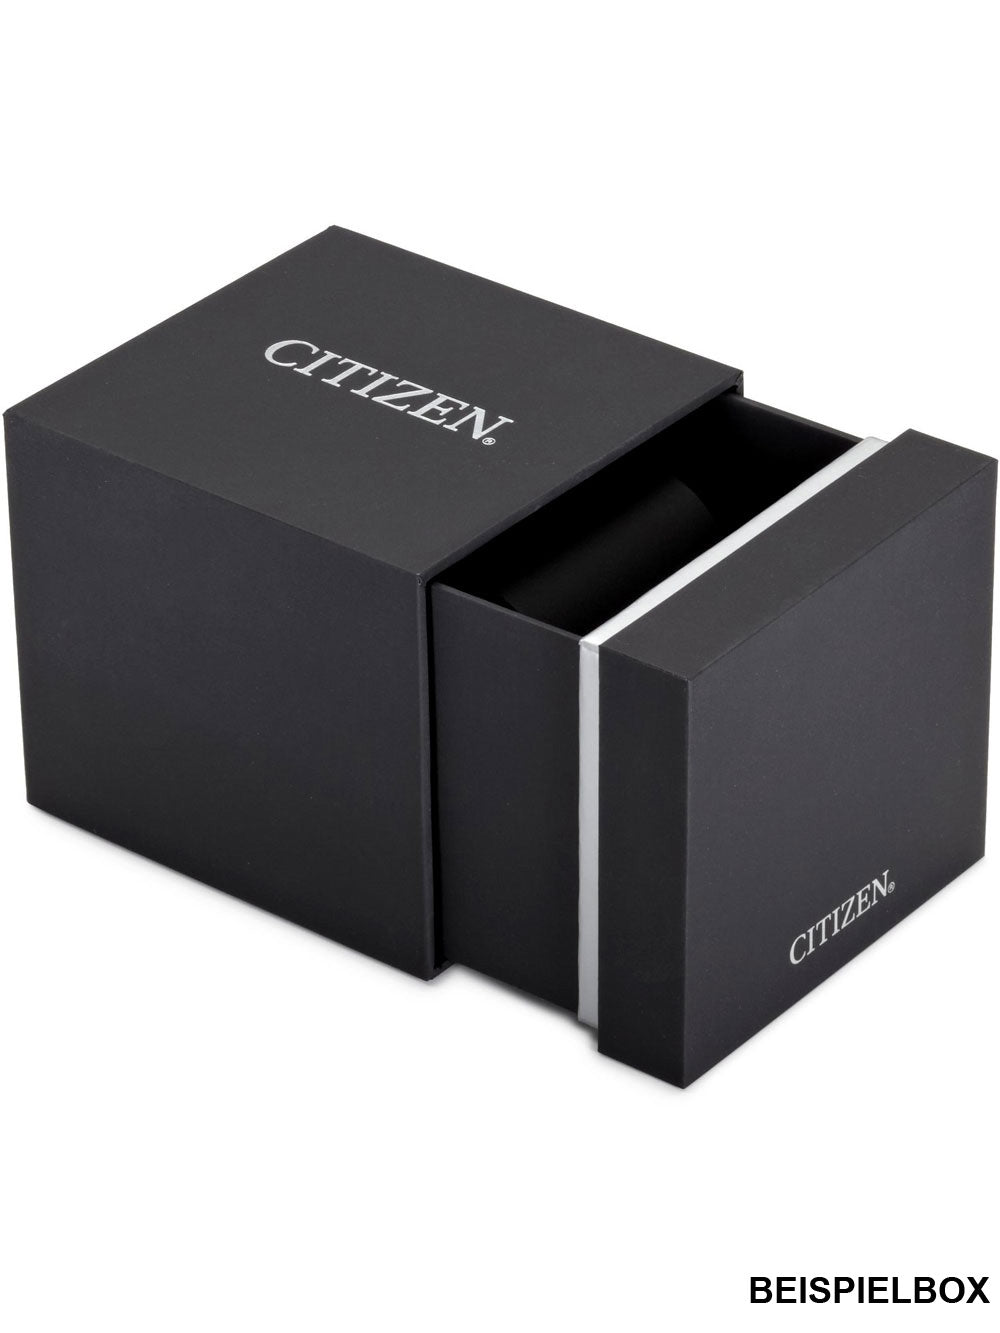 Citizen EE4012-10A Bluetooth Smart Watch Ladies 33mm 5ATM